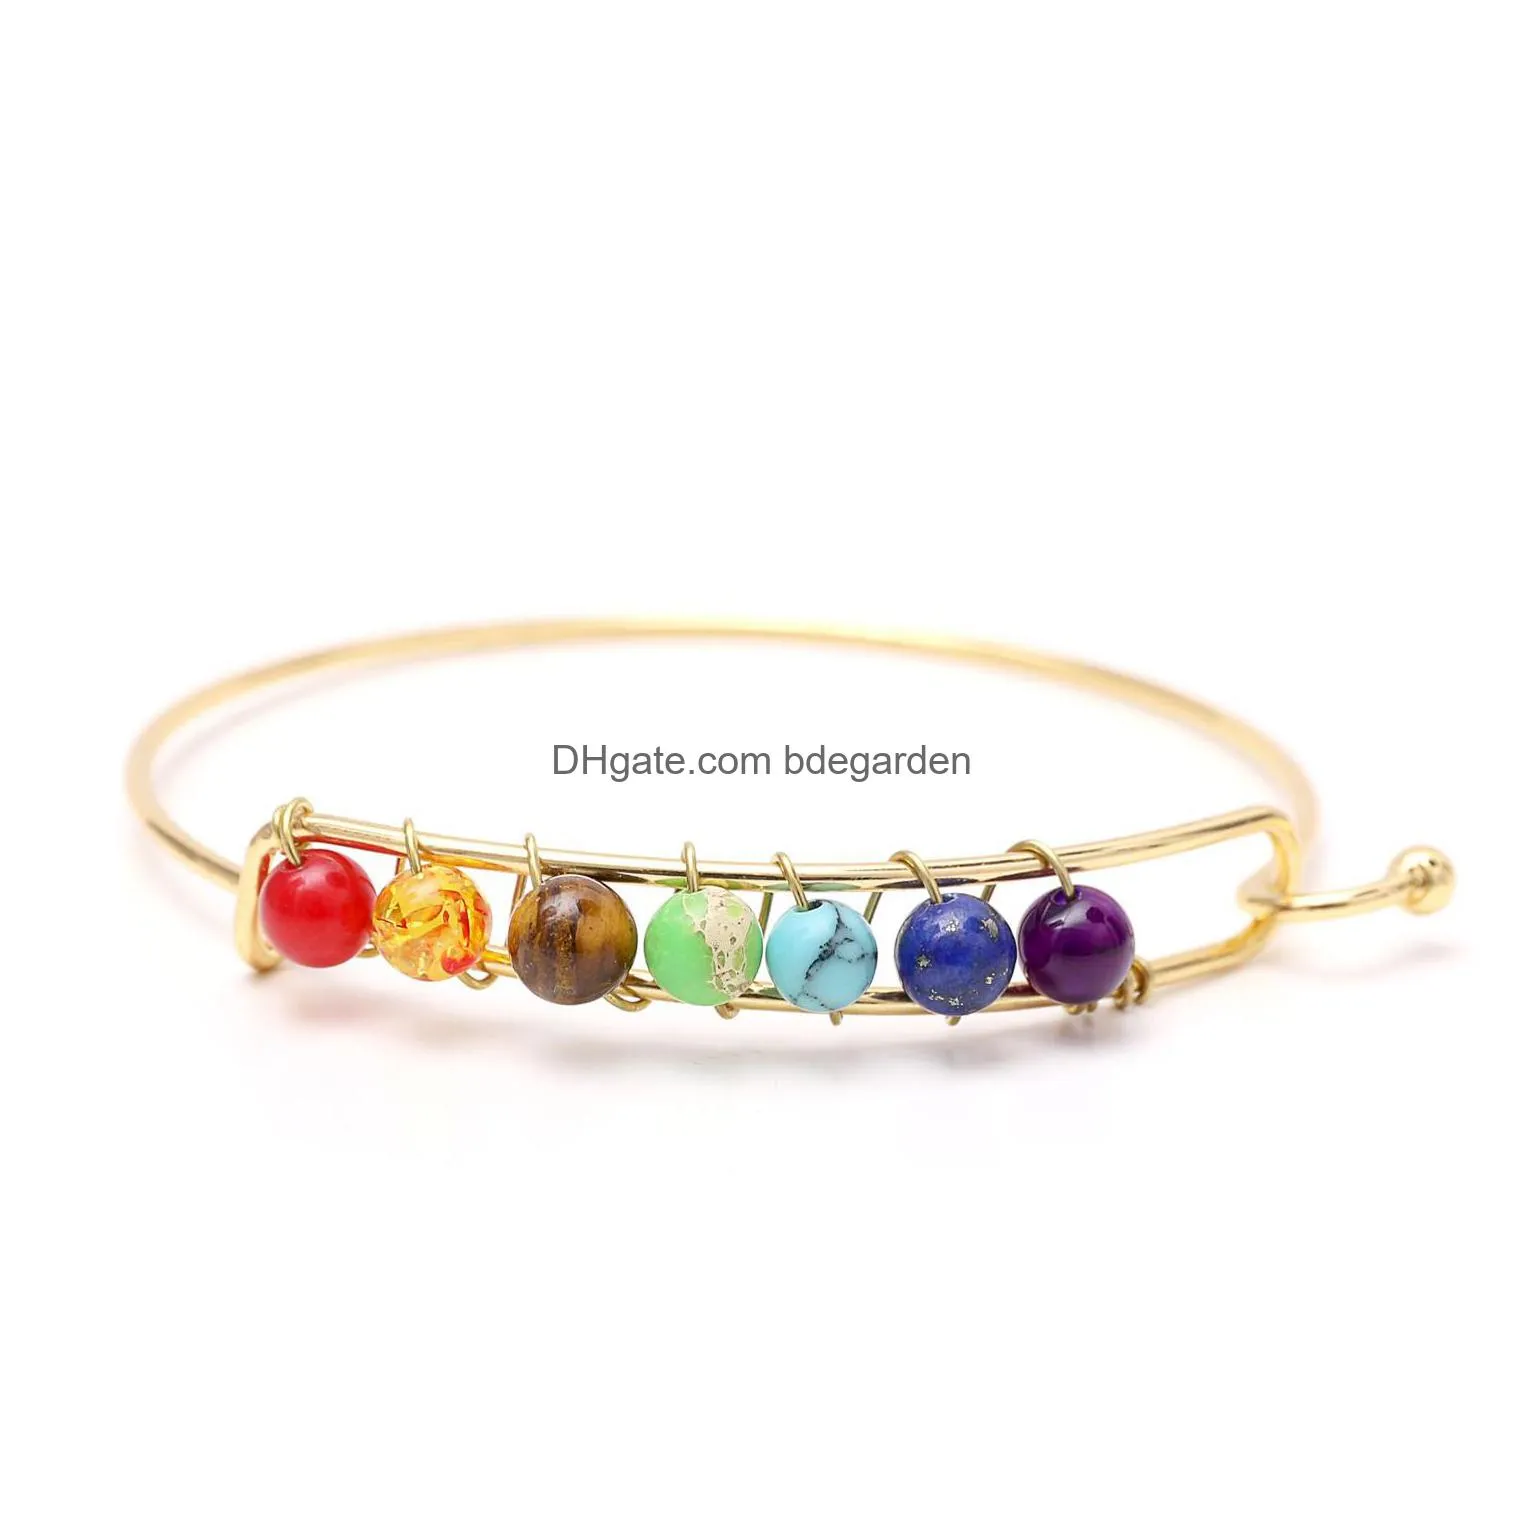 yoga 7 chakra wire bracelet for women silver gold natural stone bangle beads reiki spiritual buddha mens fashion jewelry drop ship